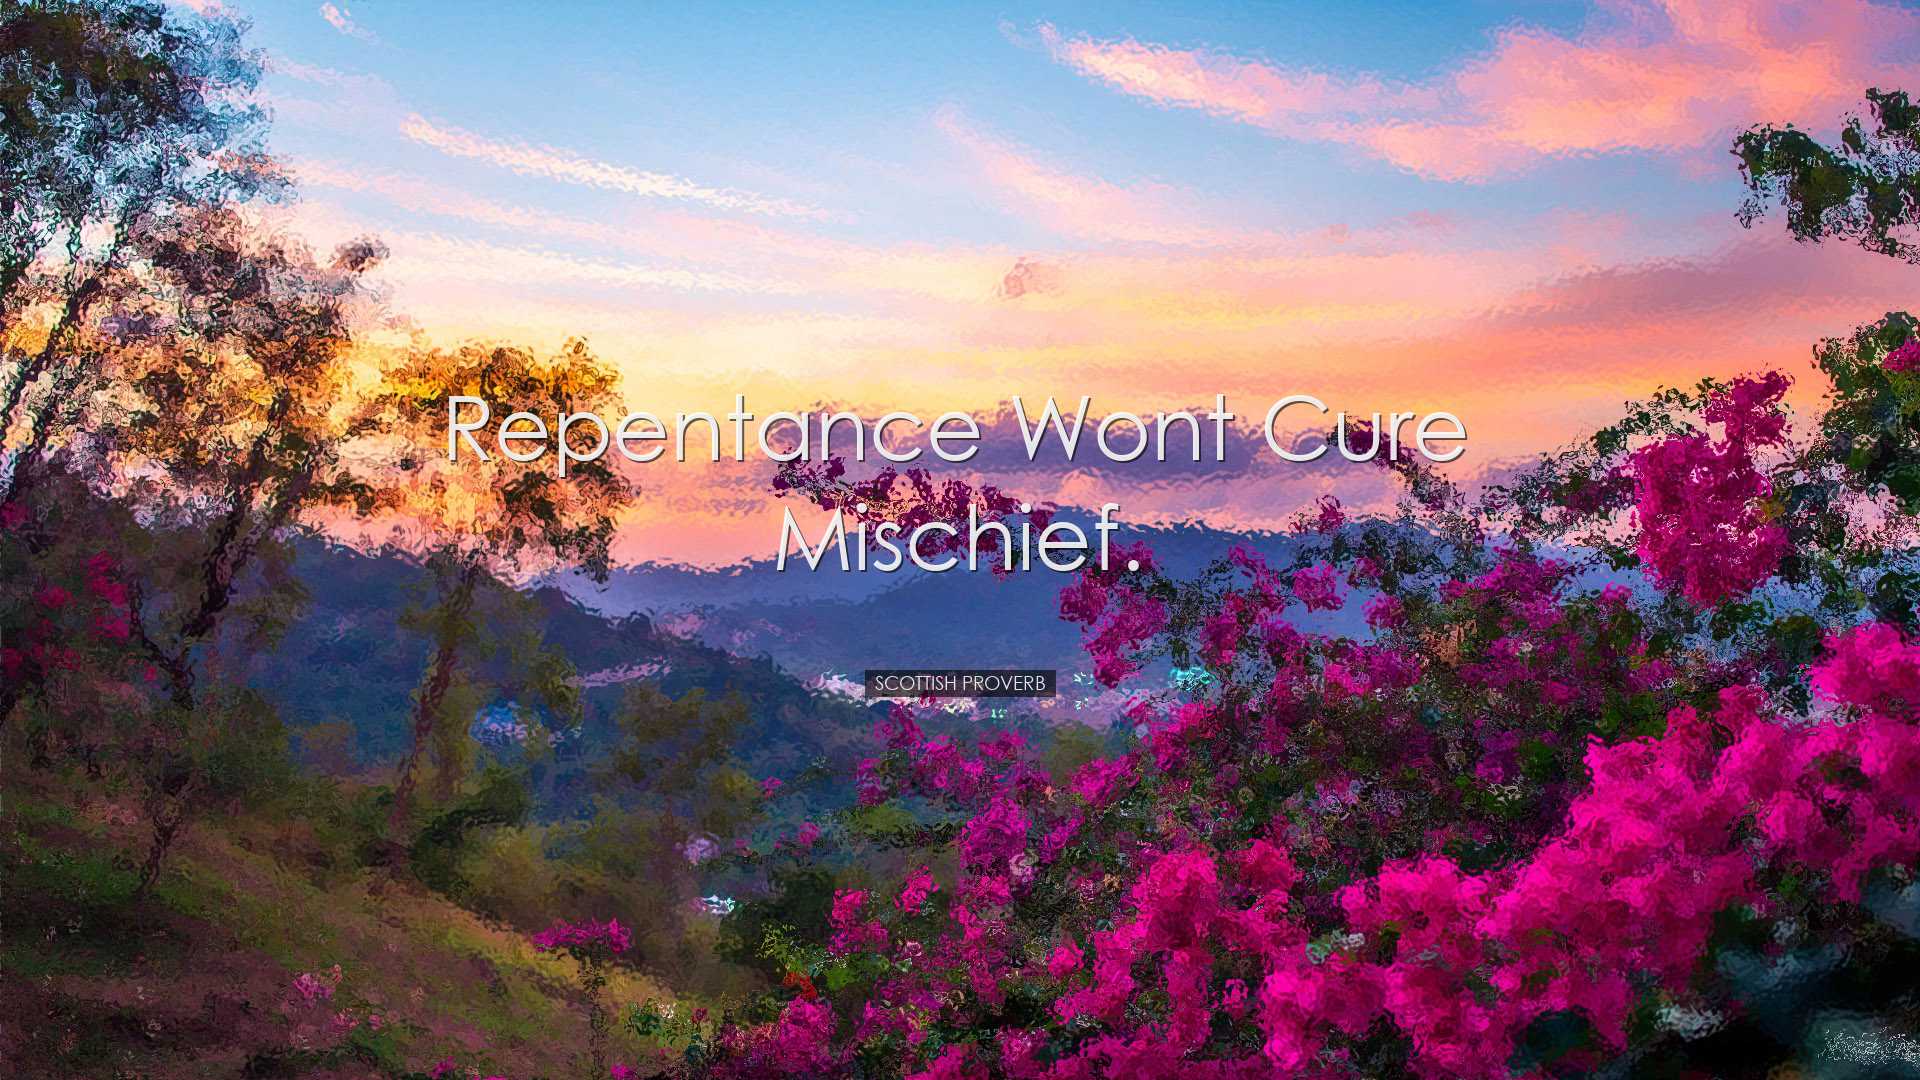 Repentance wont cure mischief. - Scottish Proverb